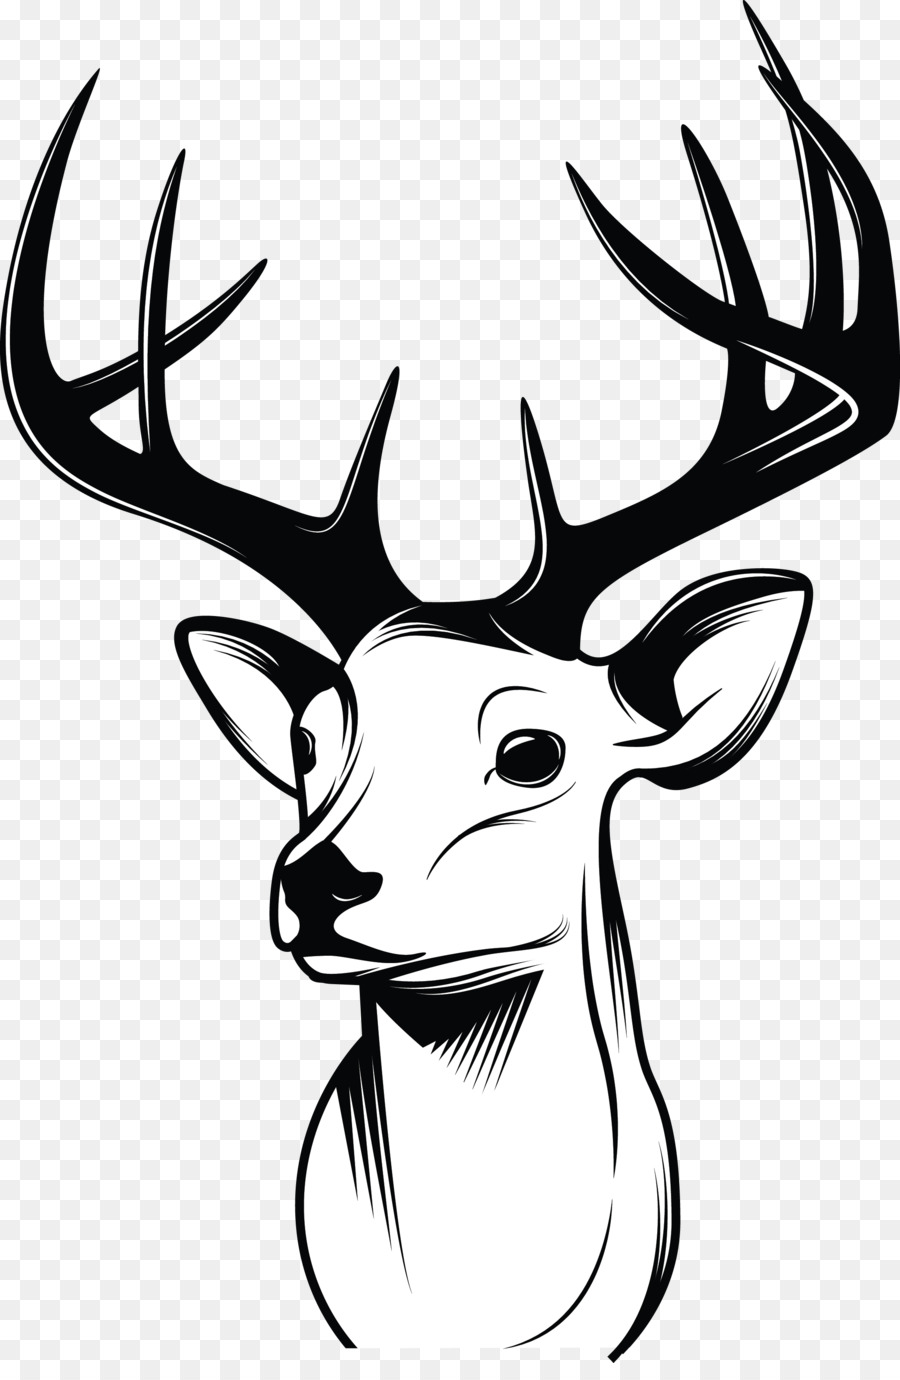 Deer Drawing Sketch - deer horns png download - 2091*3166 - Free Transparent Deer png Download.